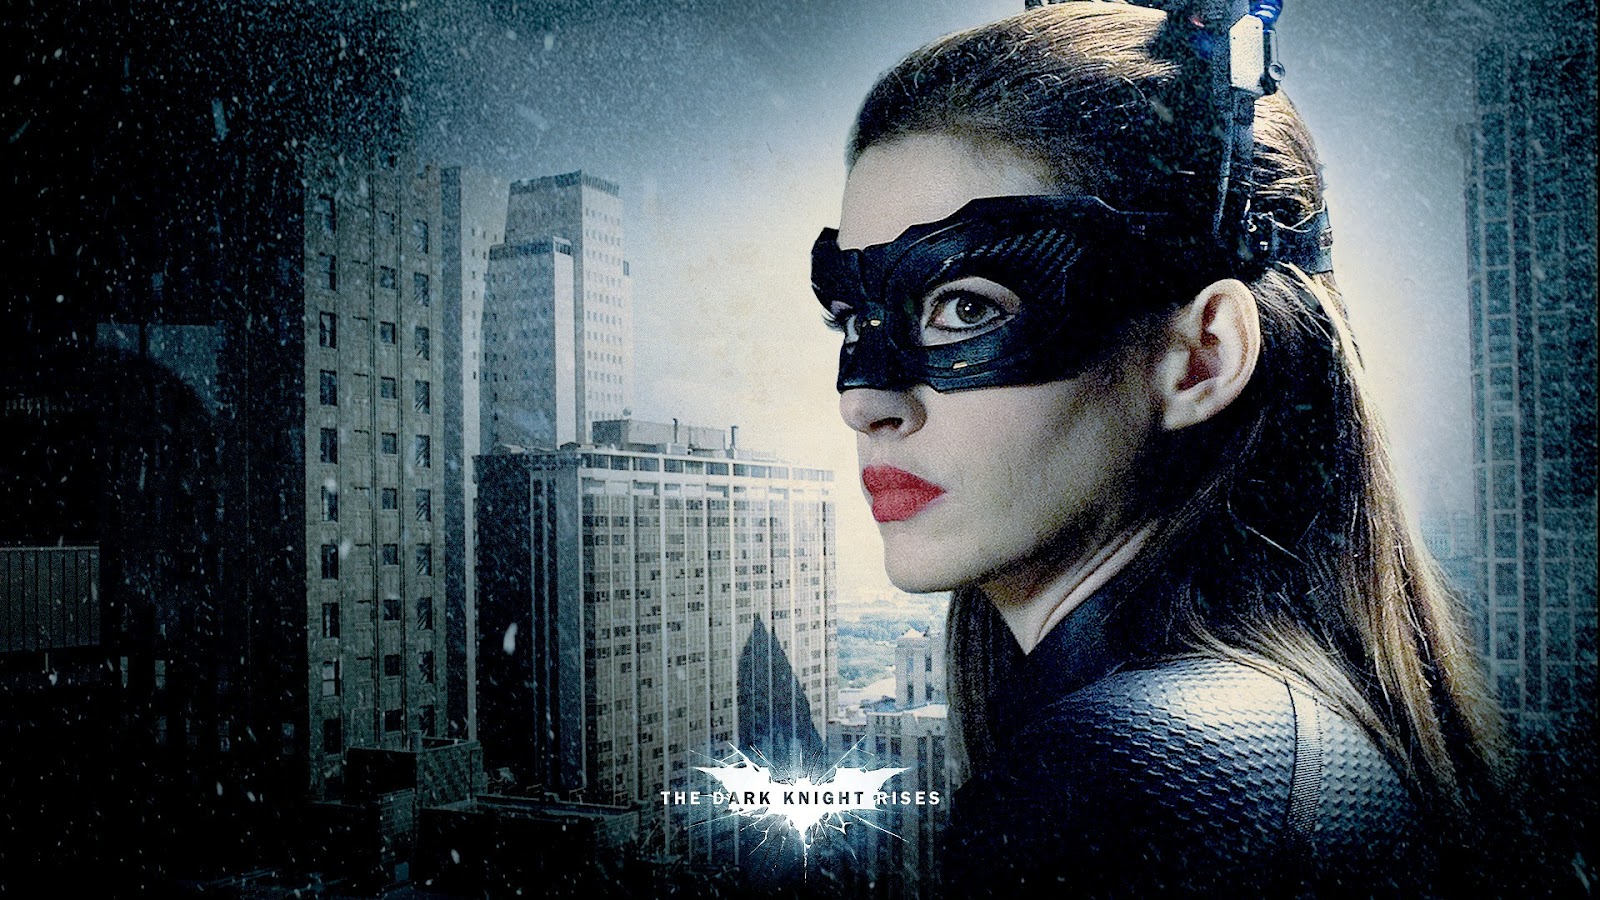 http://1.bp.blogspot.com/-Fc9Oh7MPK2U/UBlJp2LbEiI/AAAAAAAAE4c/fWI7rdSMmZU/s0/Anne-Hathaway-Catwoman-The-Dark-Knight-Rises.jpg